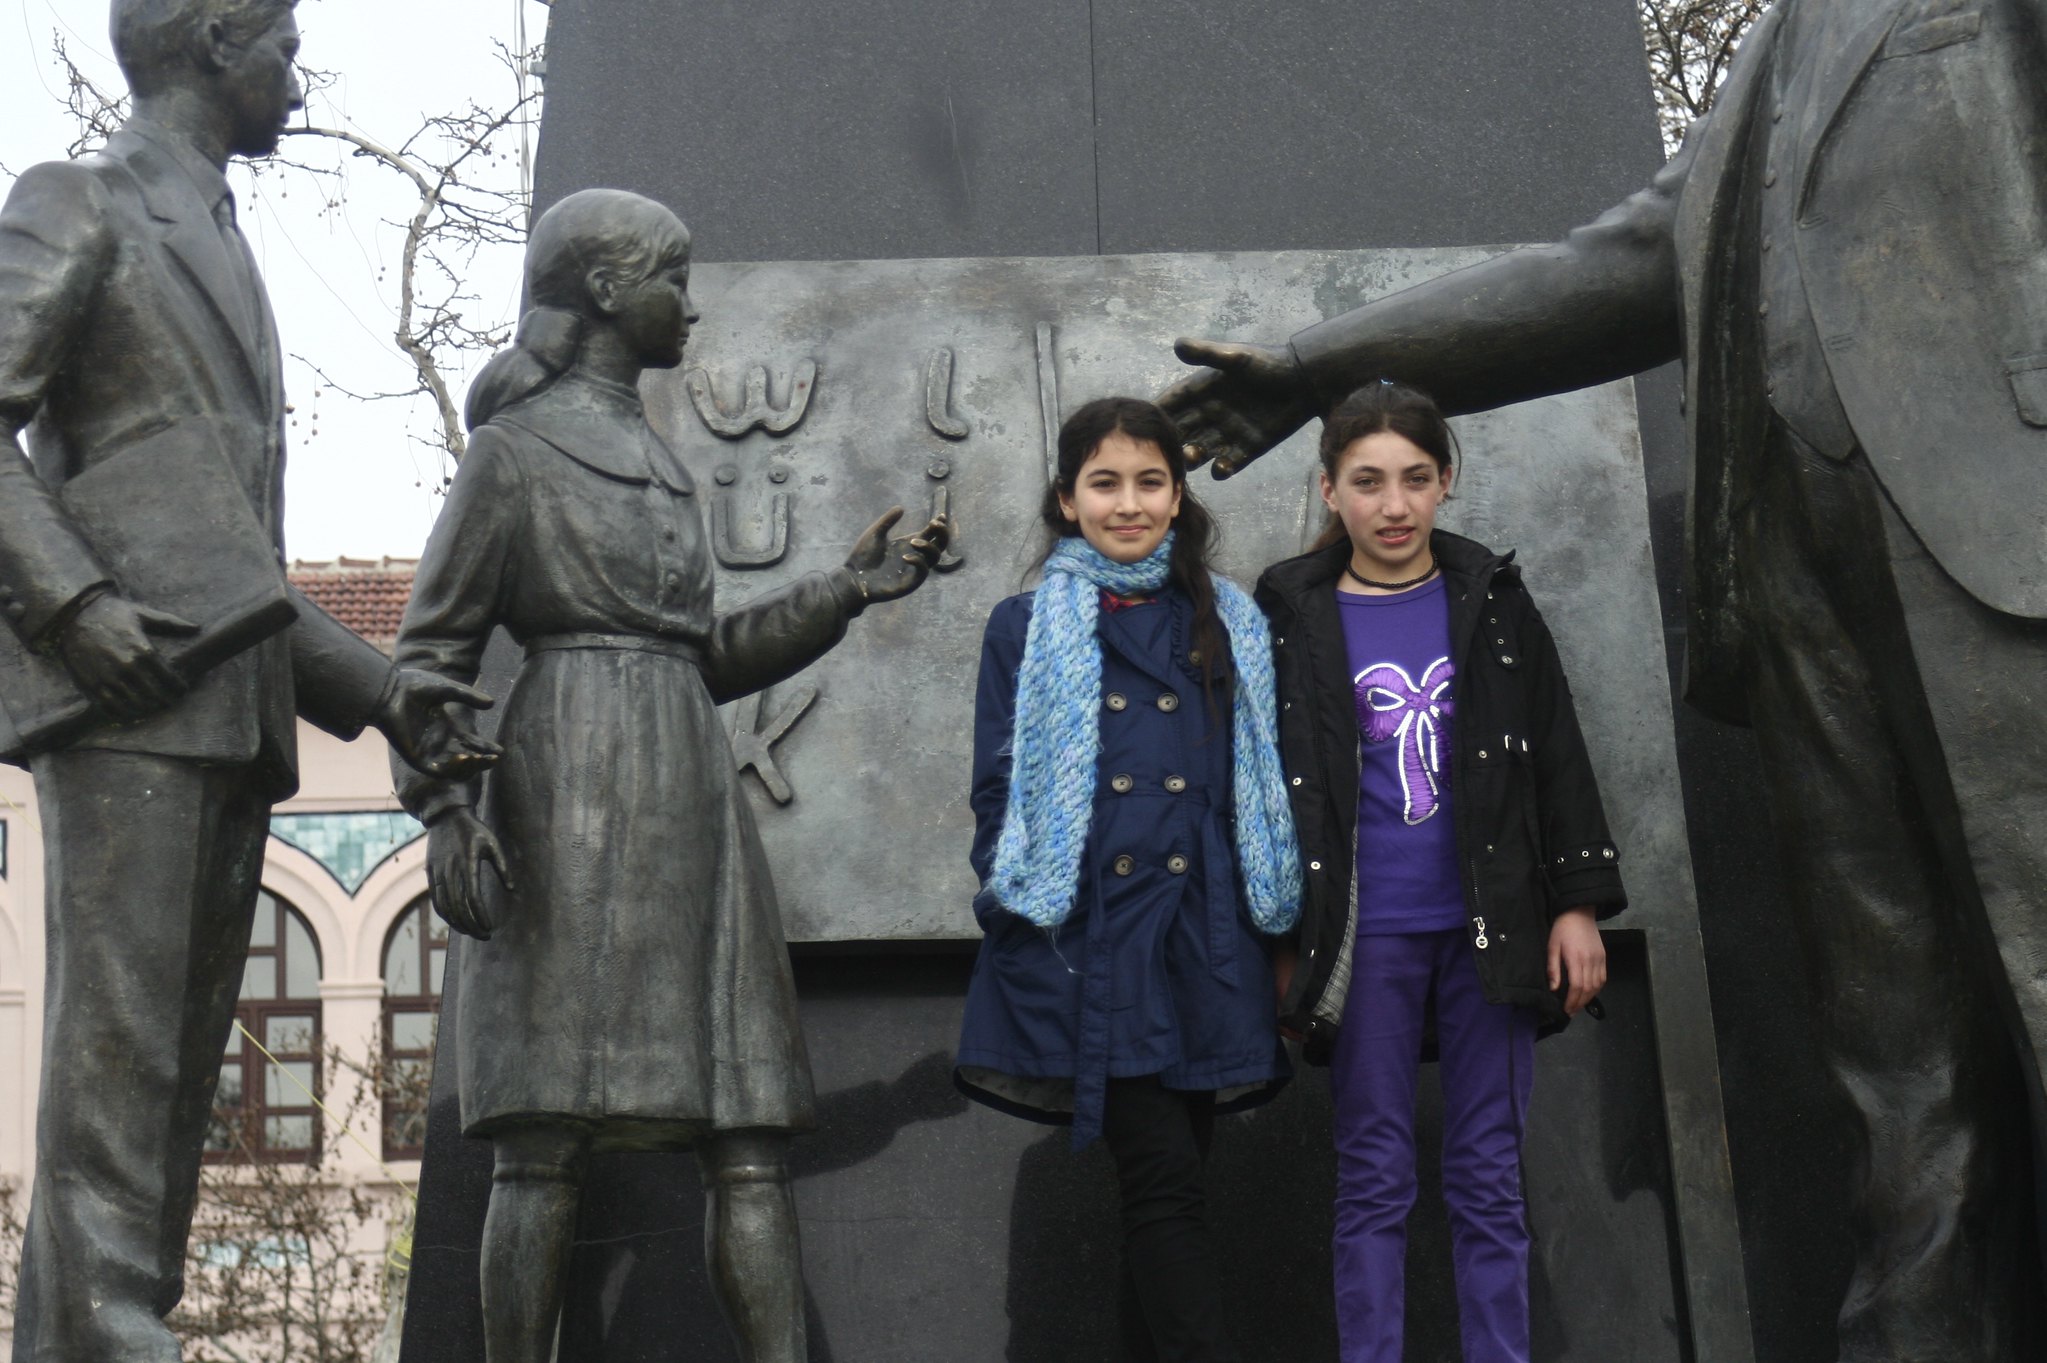 Atatürk the Teacher statue in Kadiköy